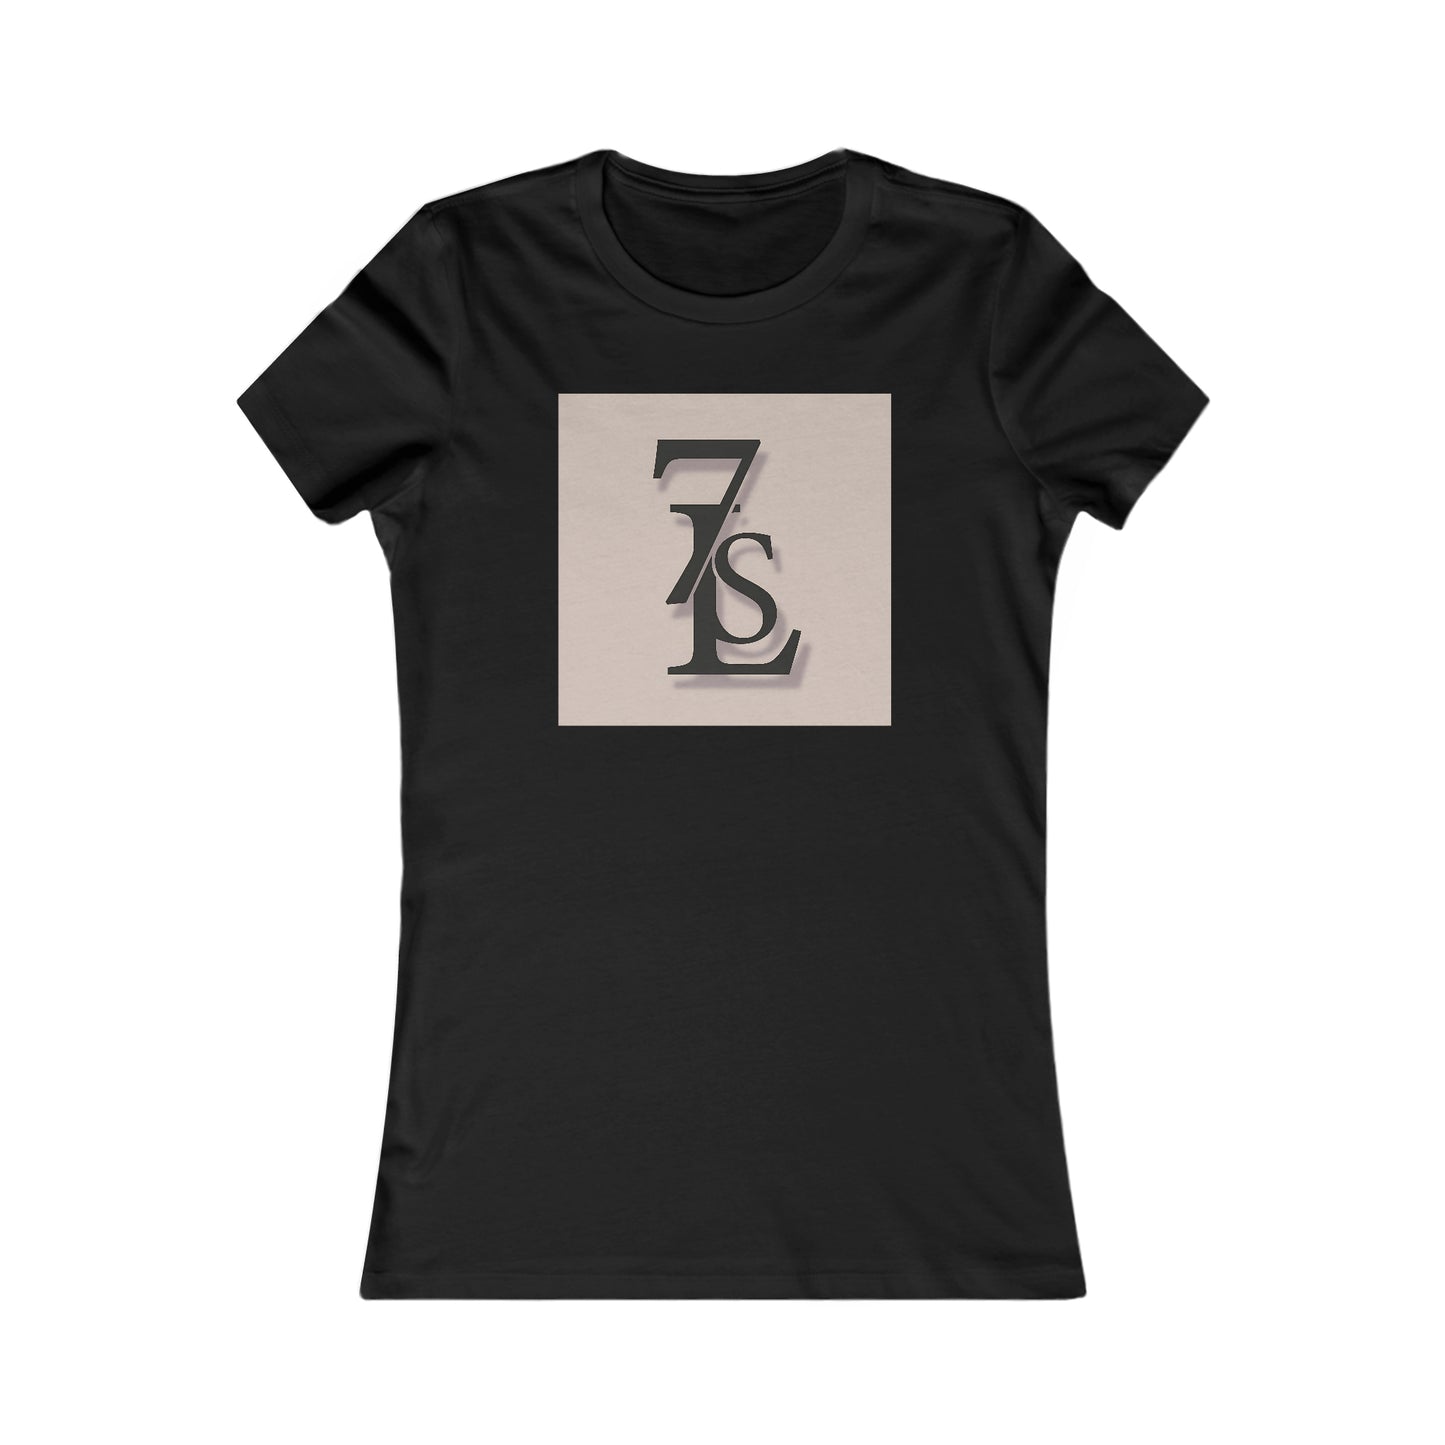 7thStreet Luxury Women's Favorite Tee- 7sL t-shirt. Beige Pink tone with black Logo symbol